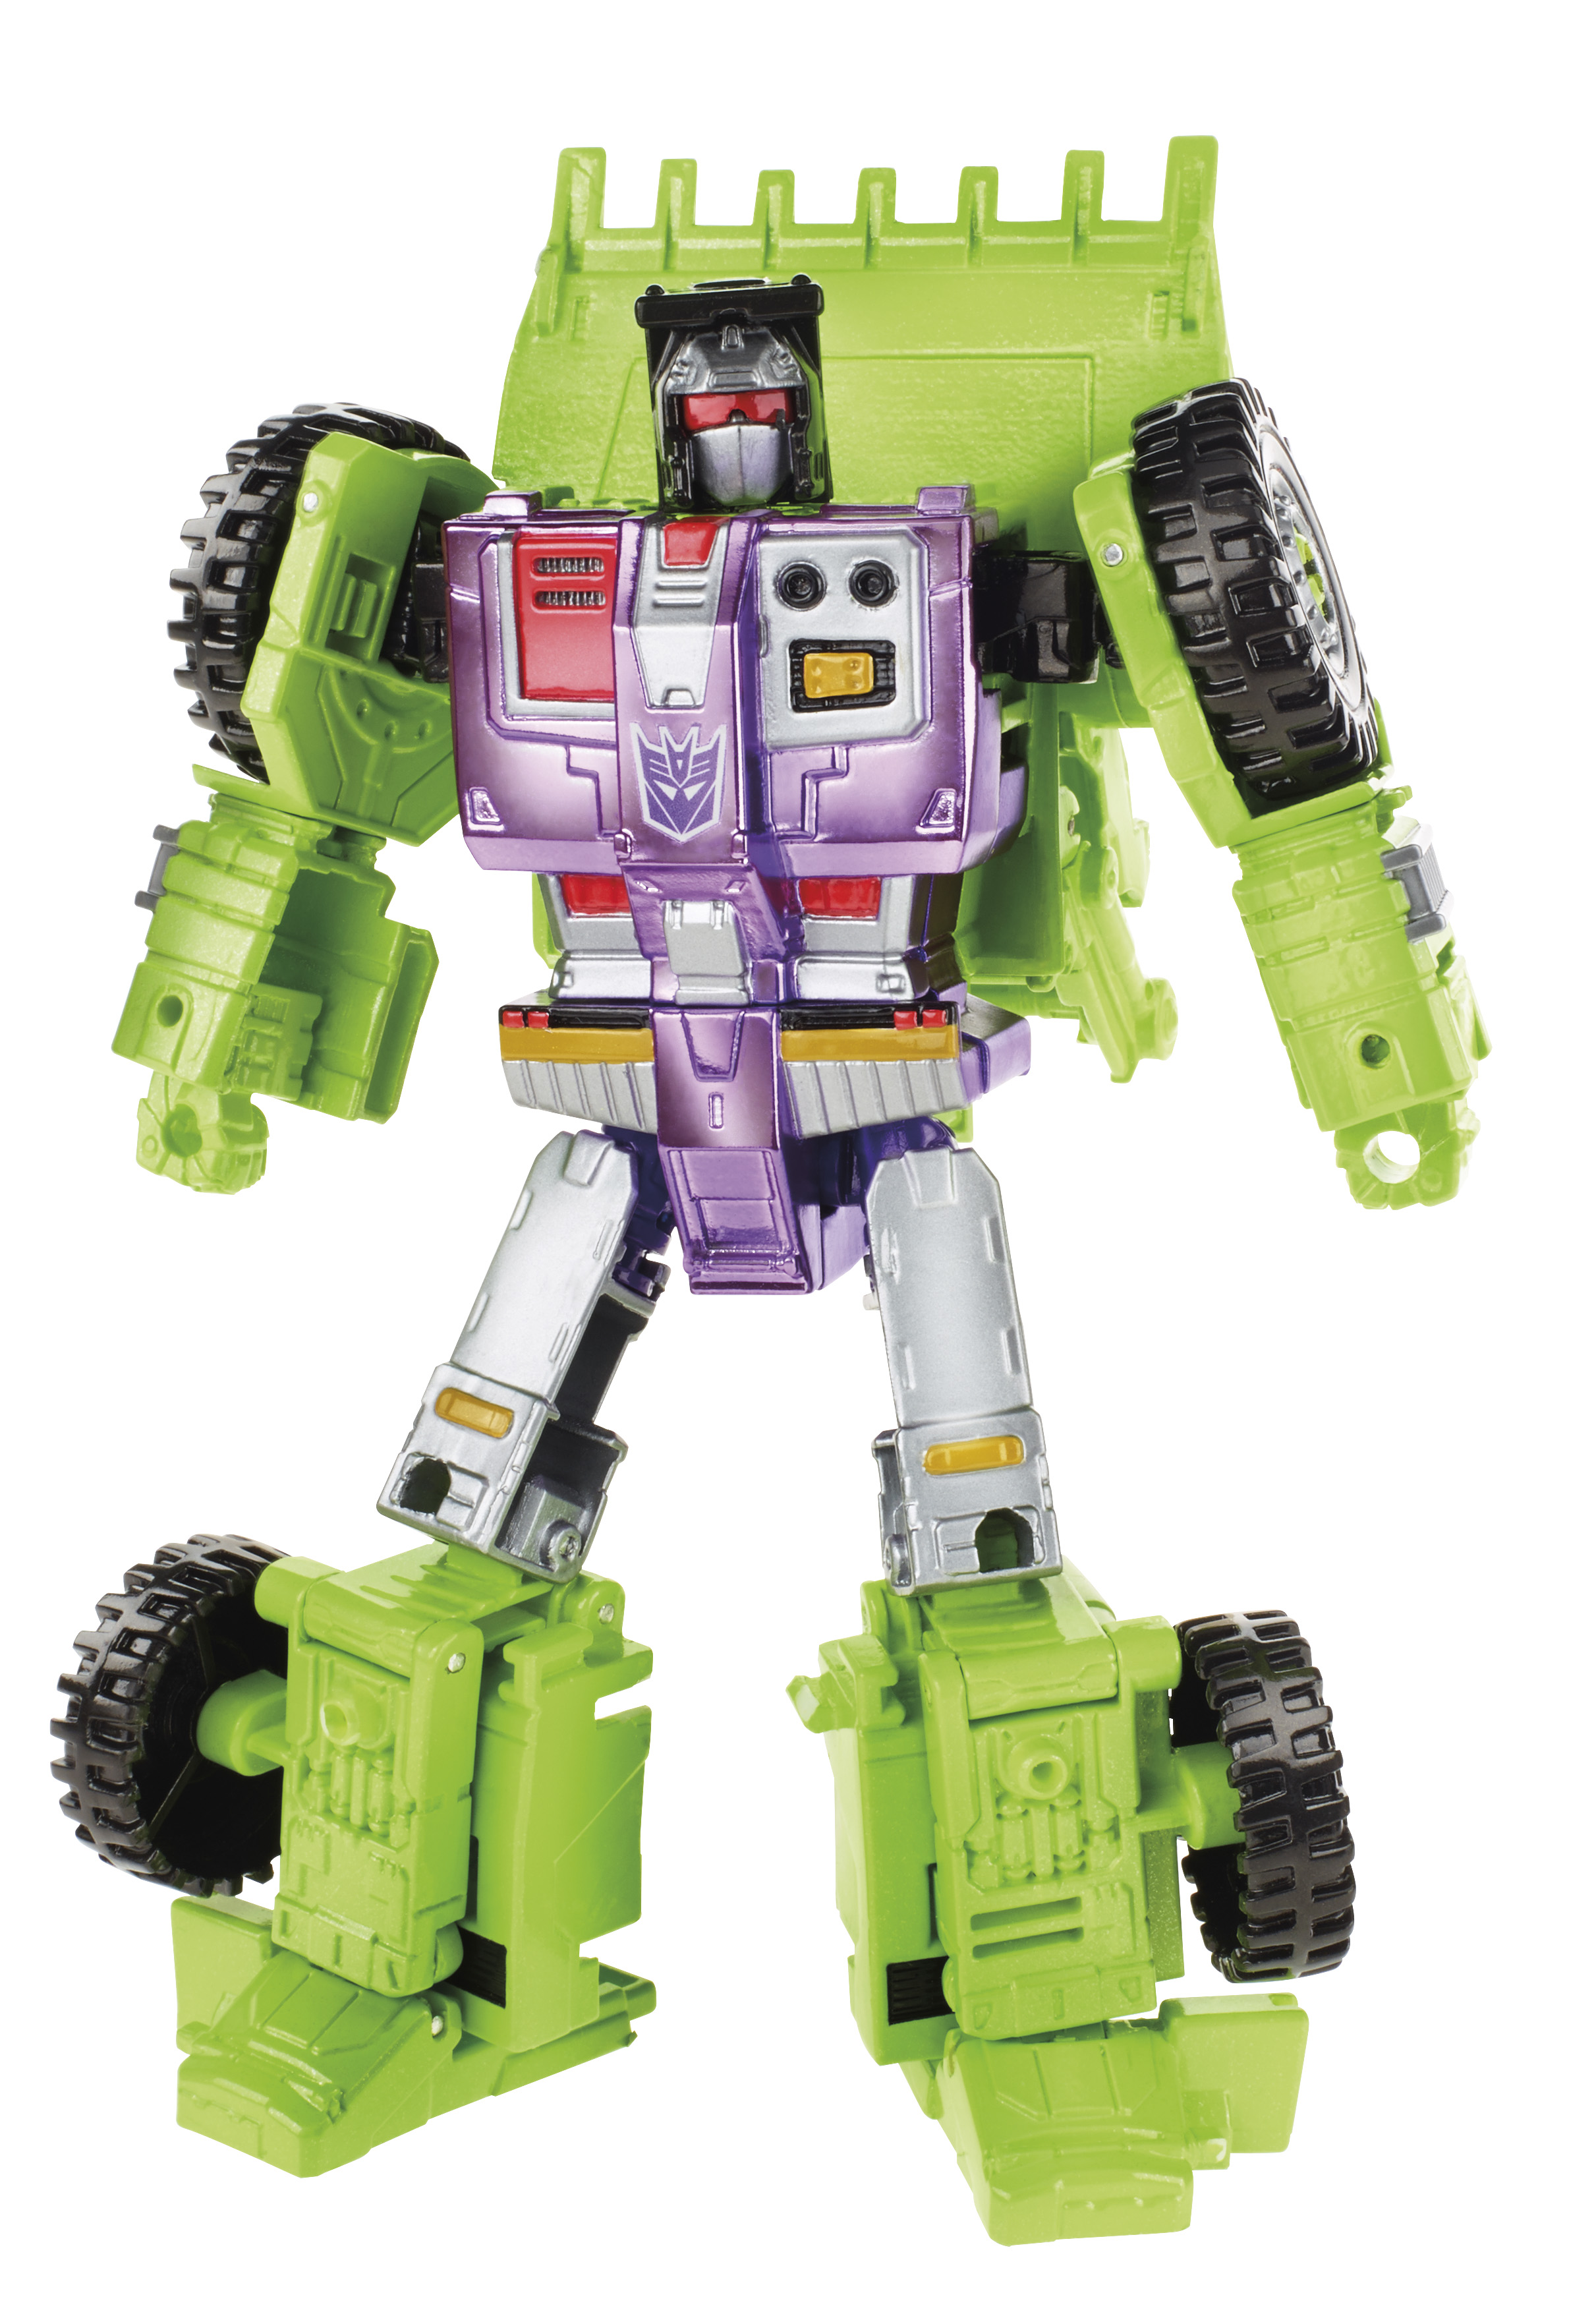 Defender scrapper. Transformers Scrapper g1. Hasbro трансформеры Девастатор. Игрушки трансформеры конструктиконы. Transformers g1 Combiners.